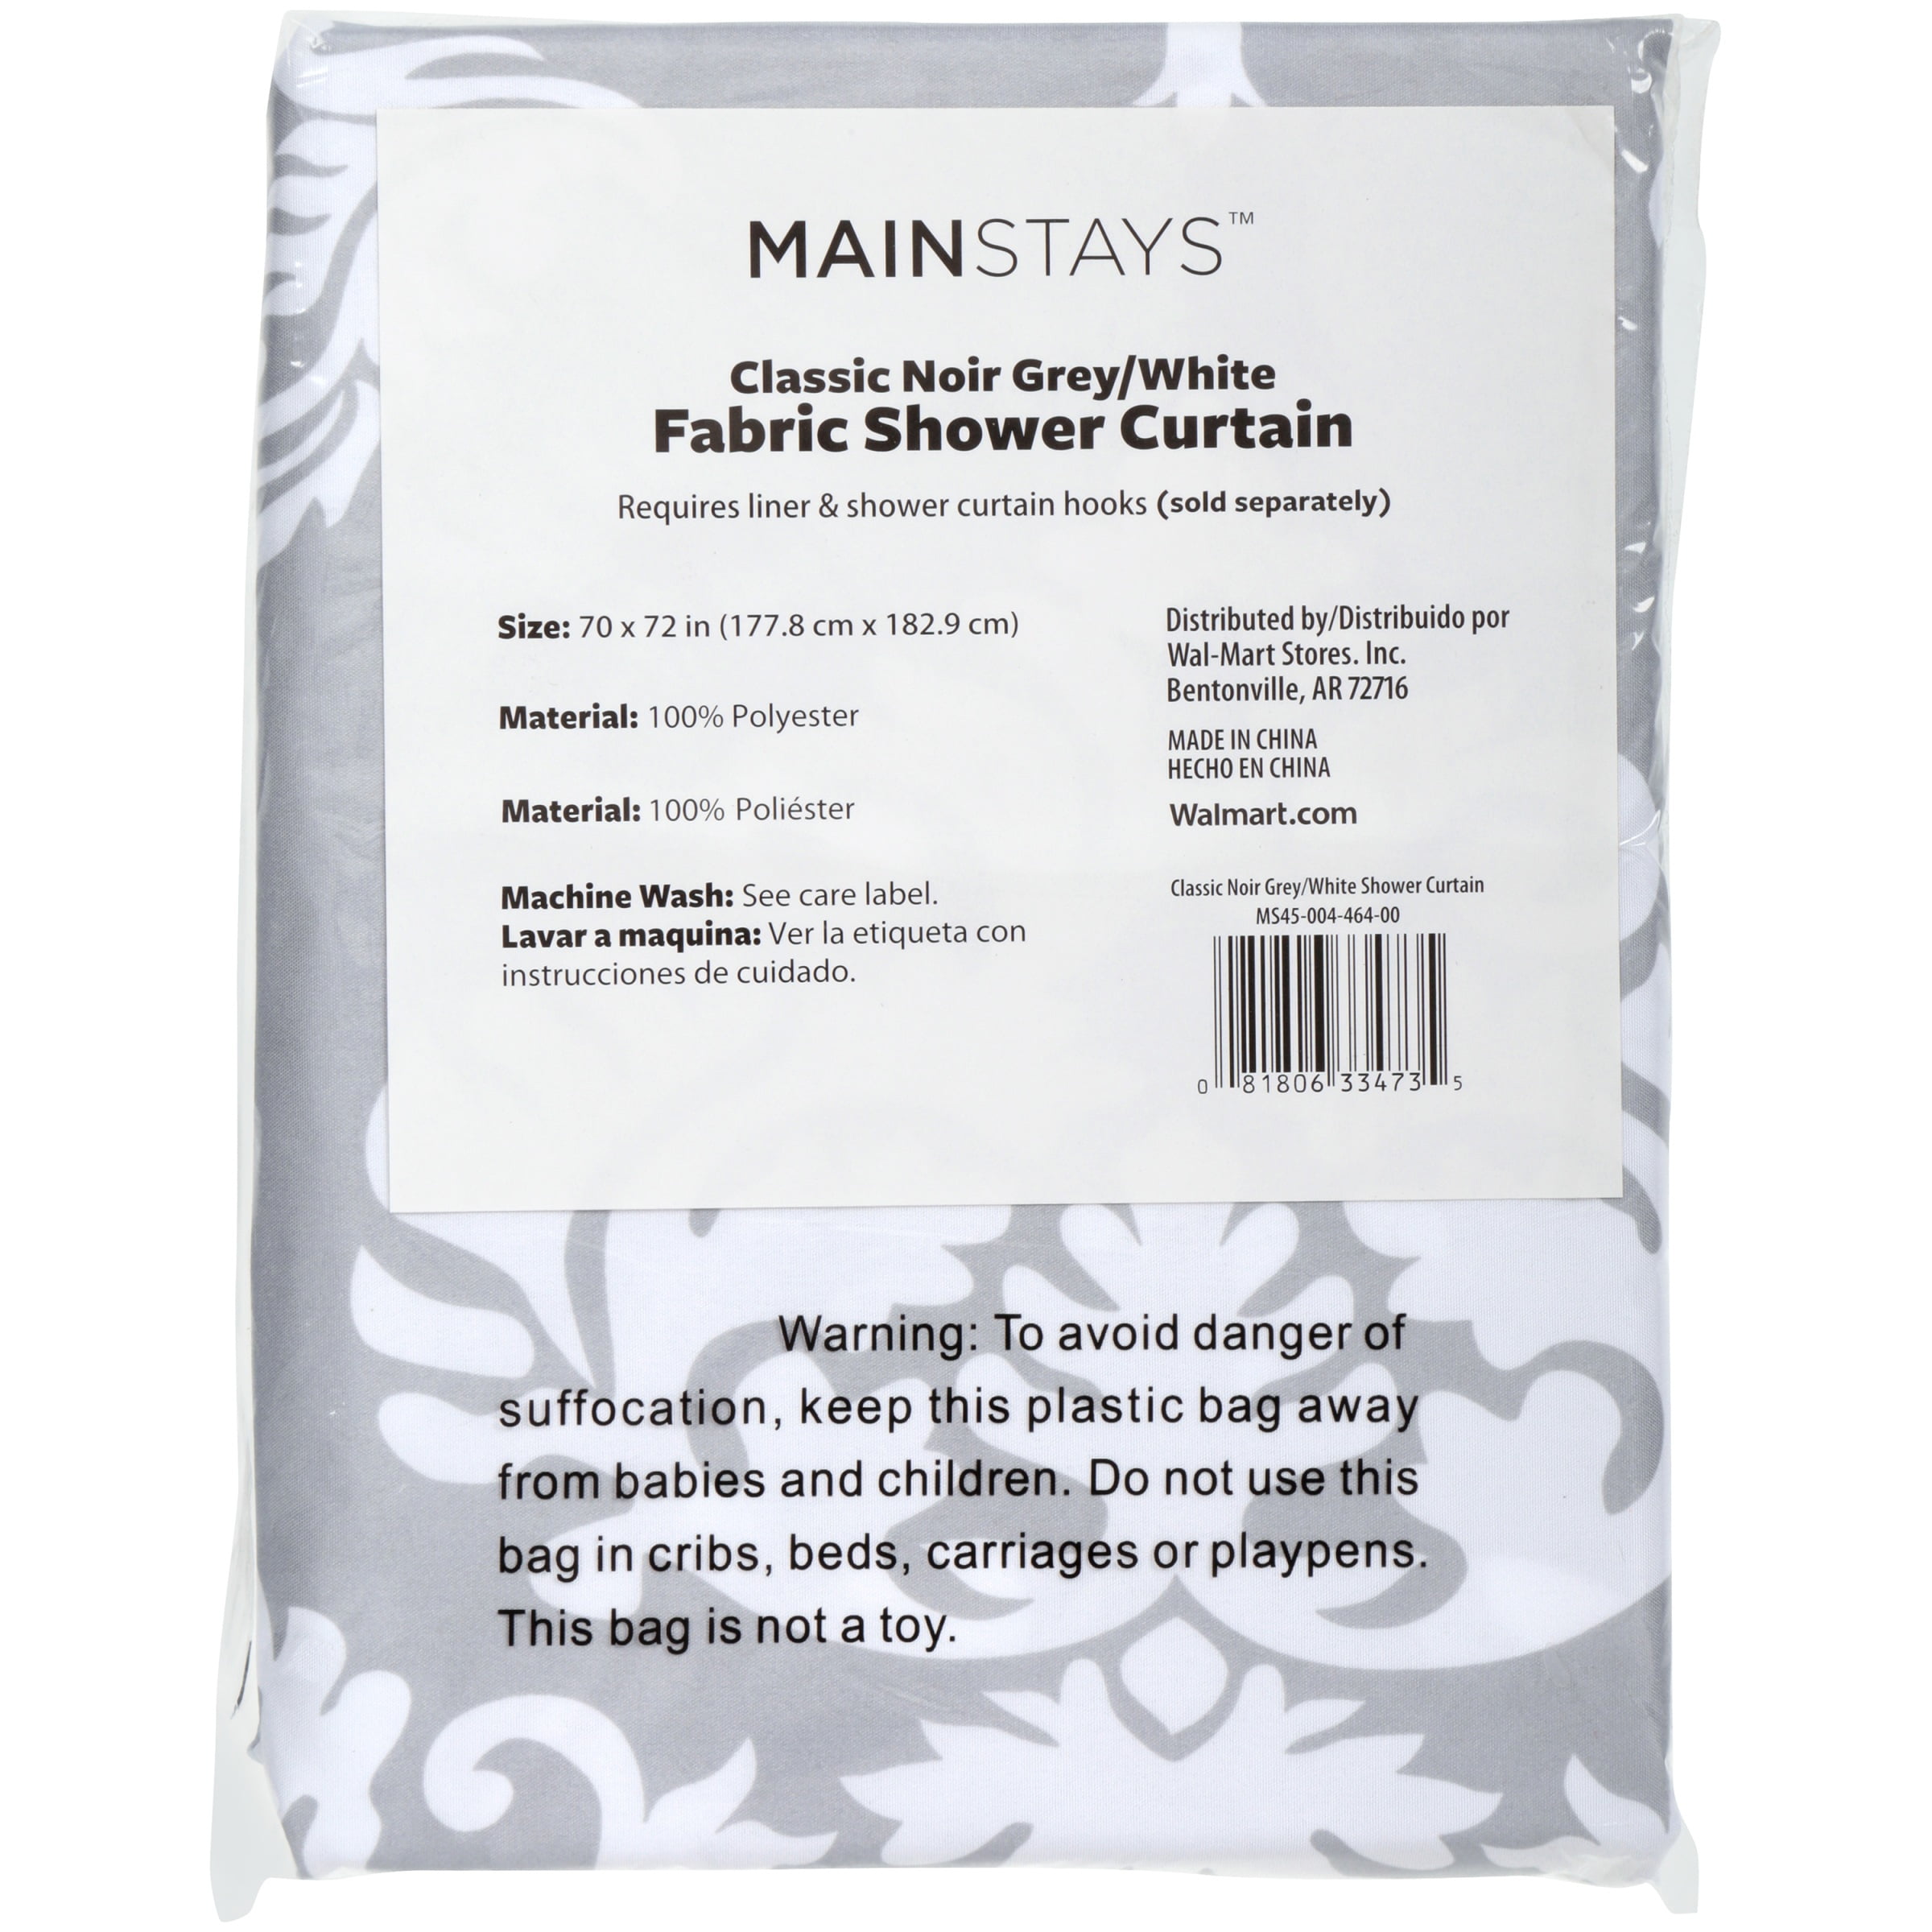 Mainstays Classic Noir Fabric Shower Curtain grey/white 